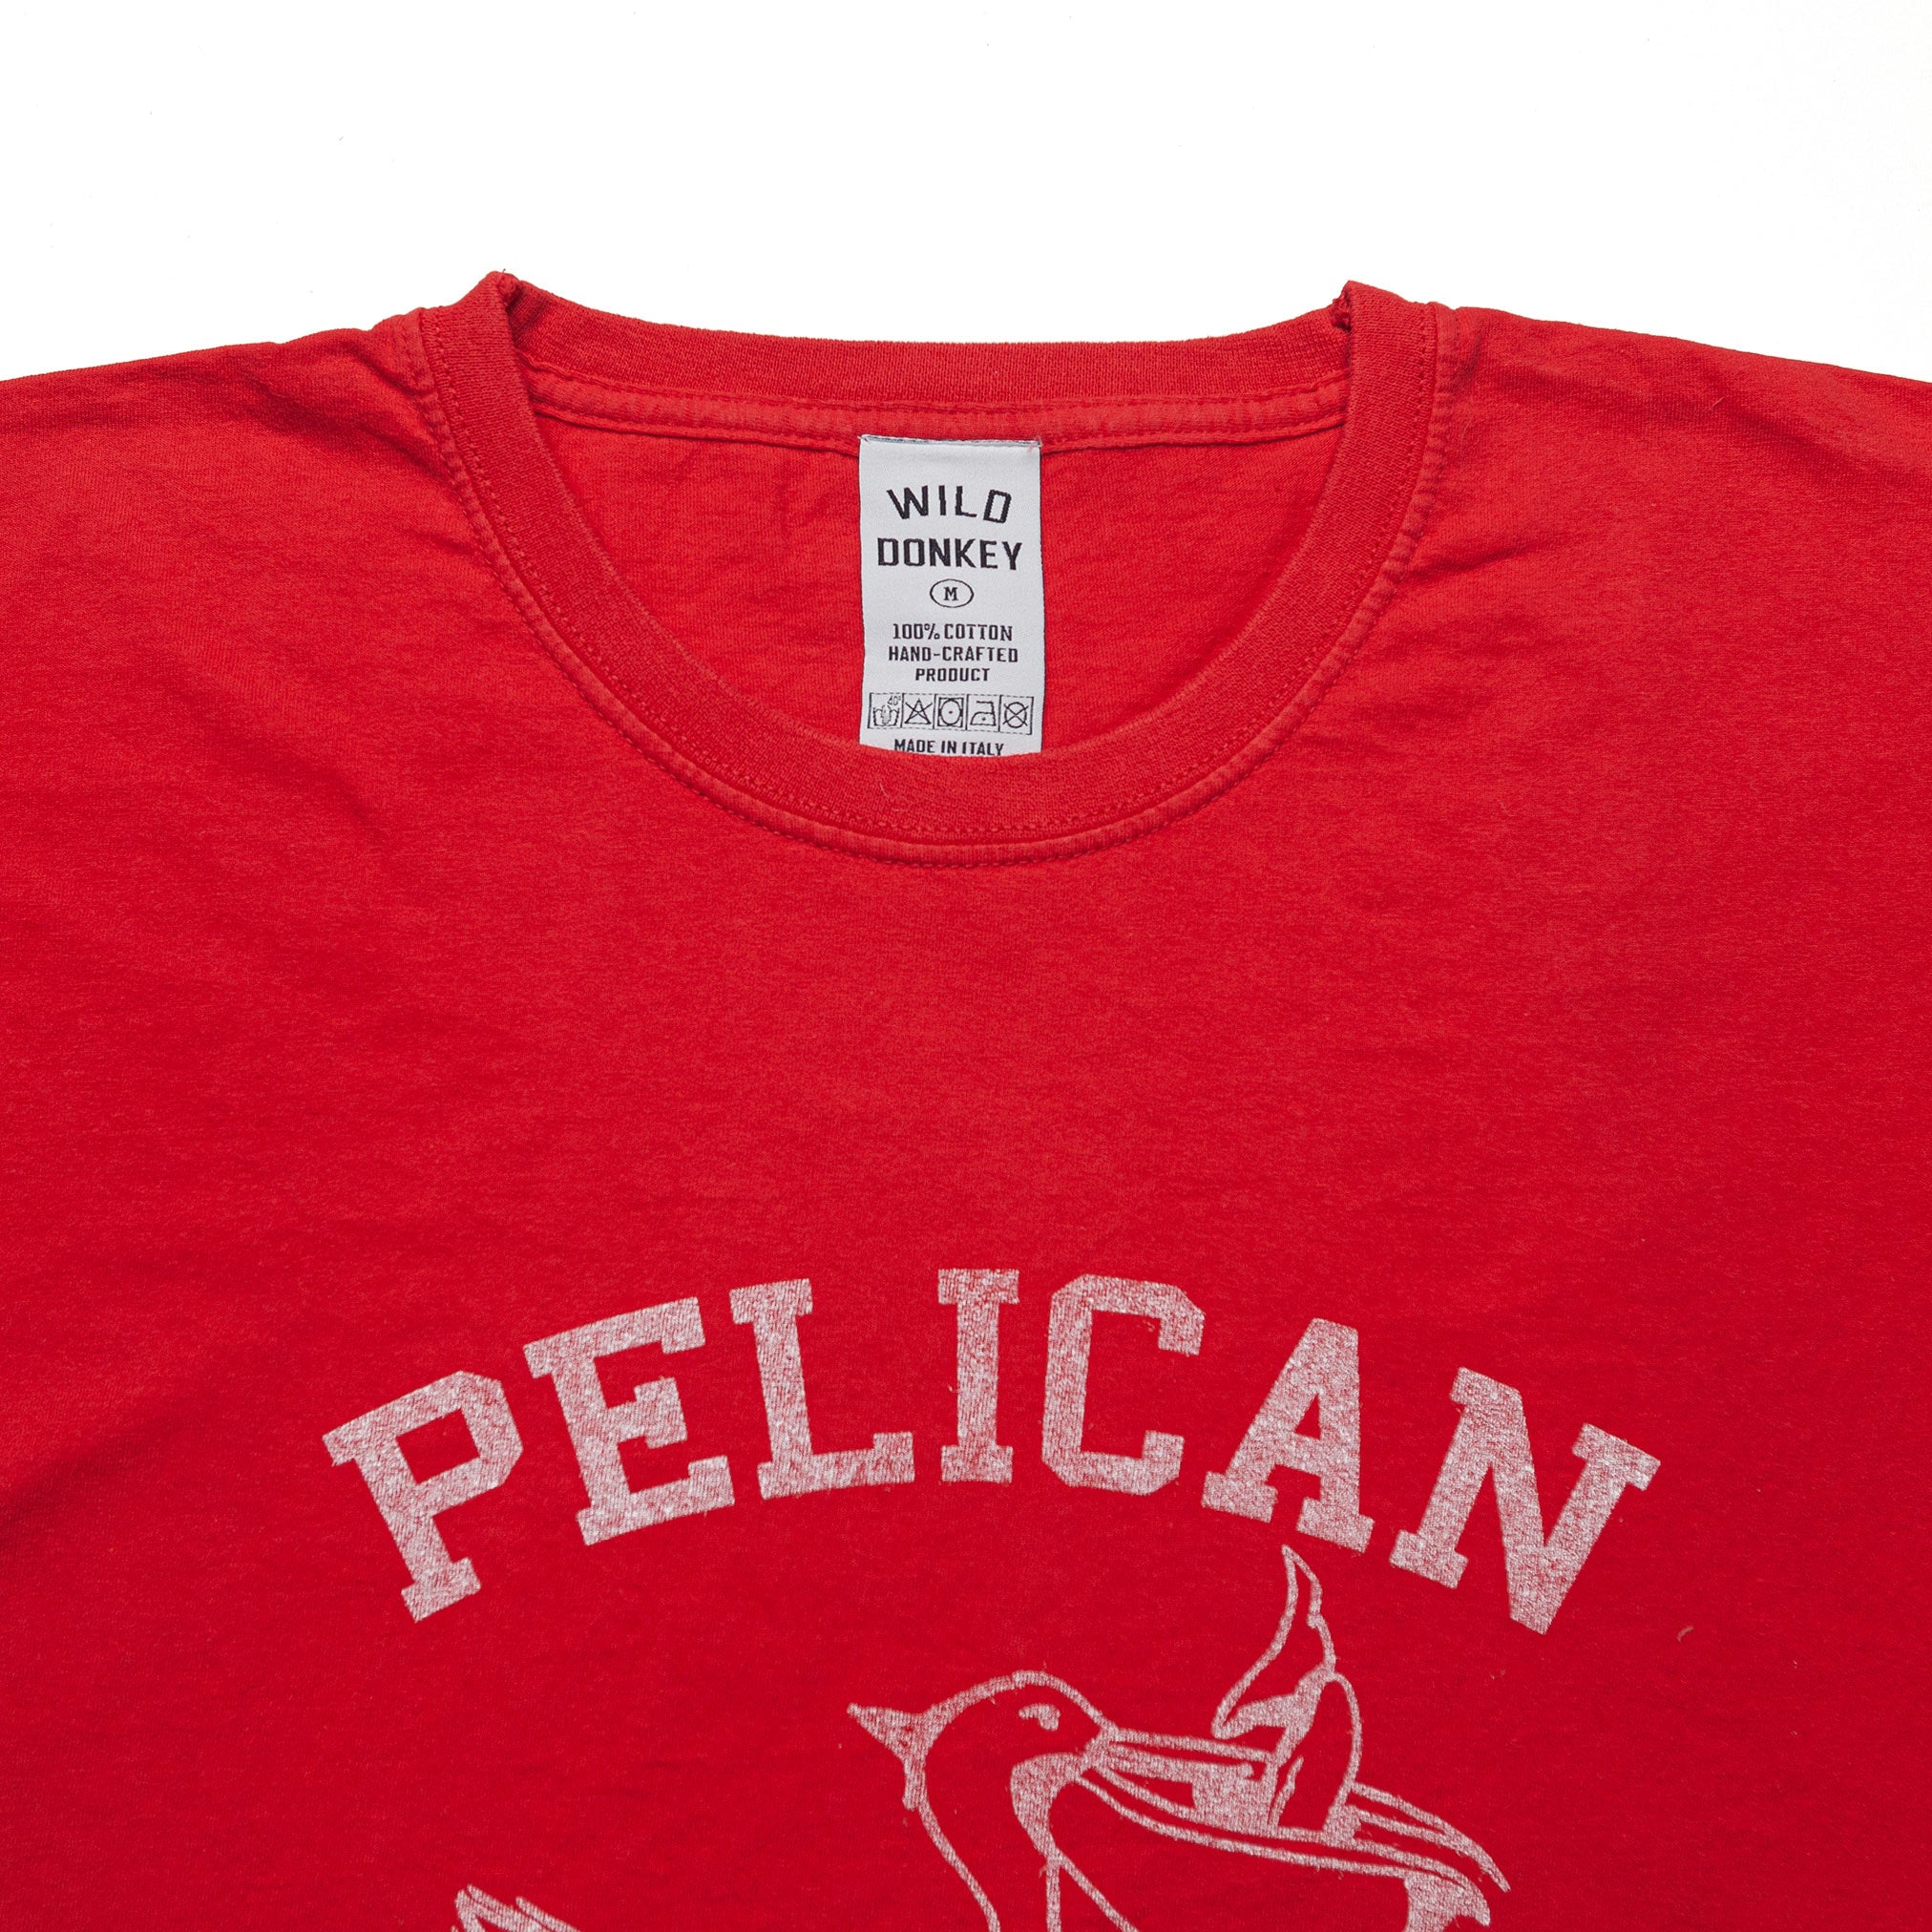 Pelican Alaskan T-Shirt